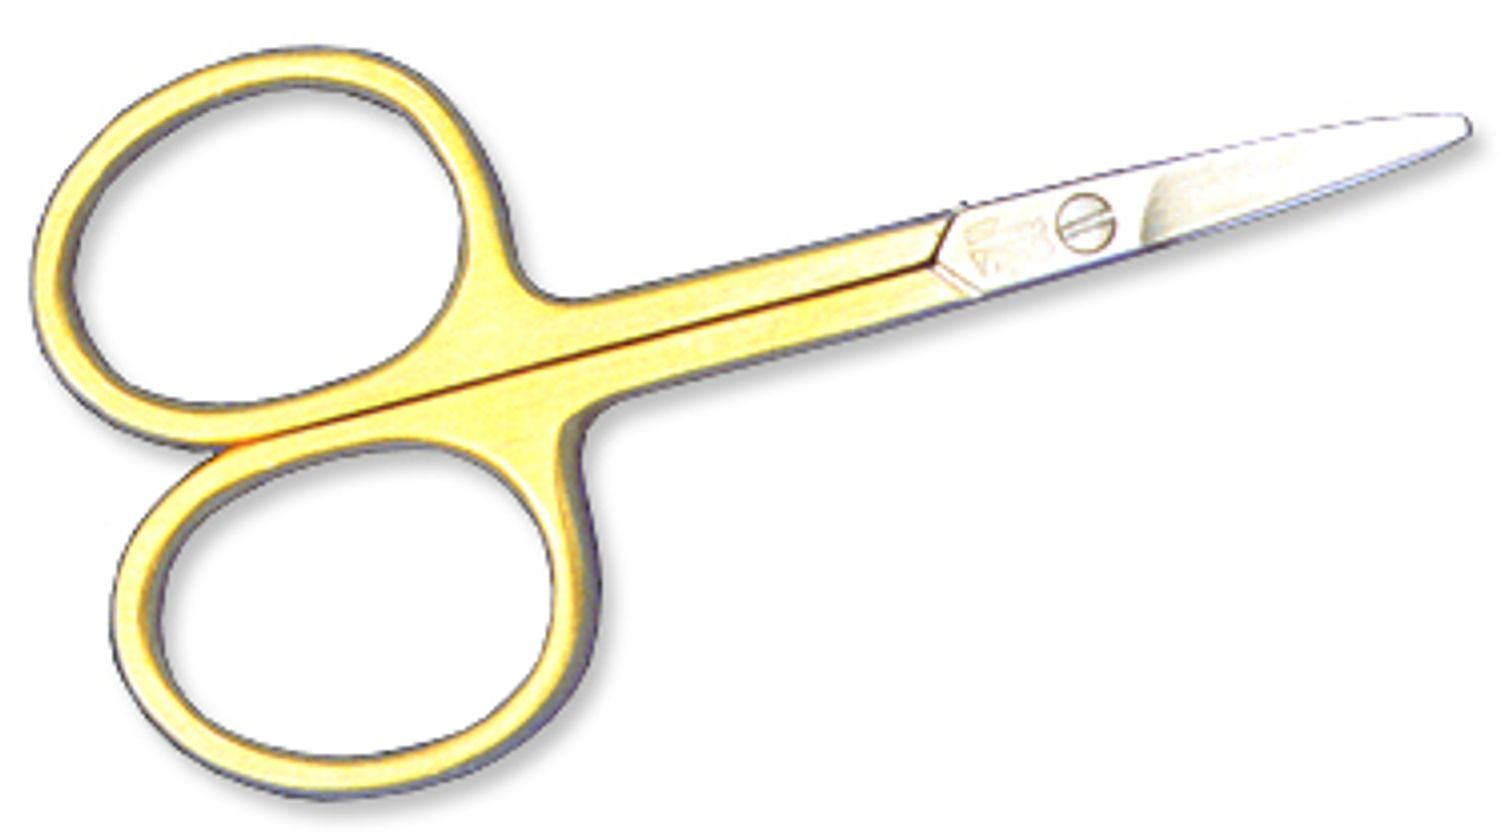 Camila CS01 Solingen Scissors, 3 Baby, Gold Plated